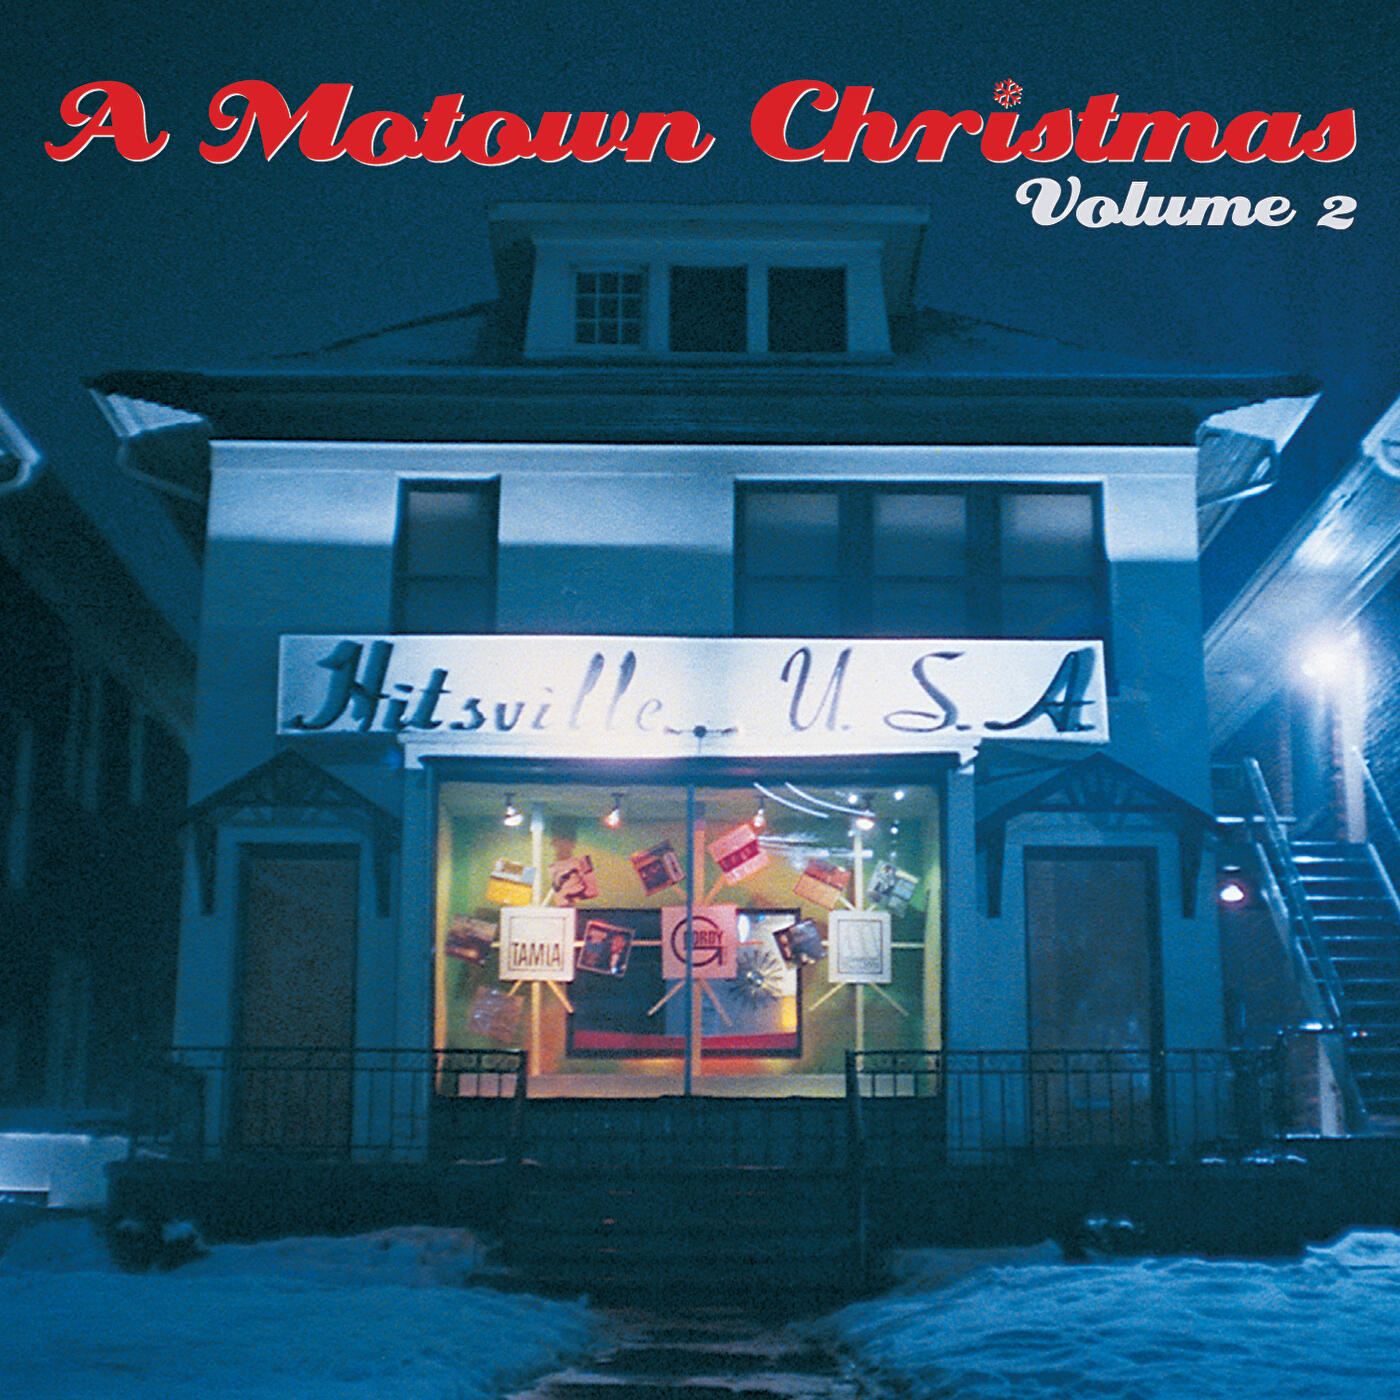 Listen Free to Various Artists - A Motown Christmas Radio on iHeartRadio | iHeartRadio